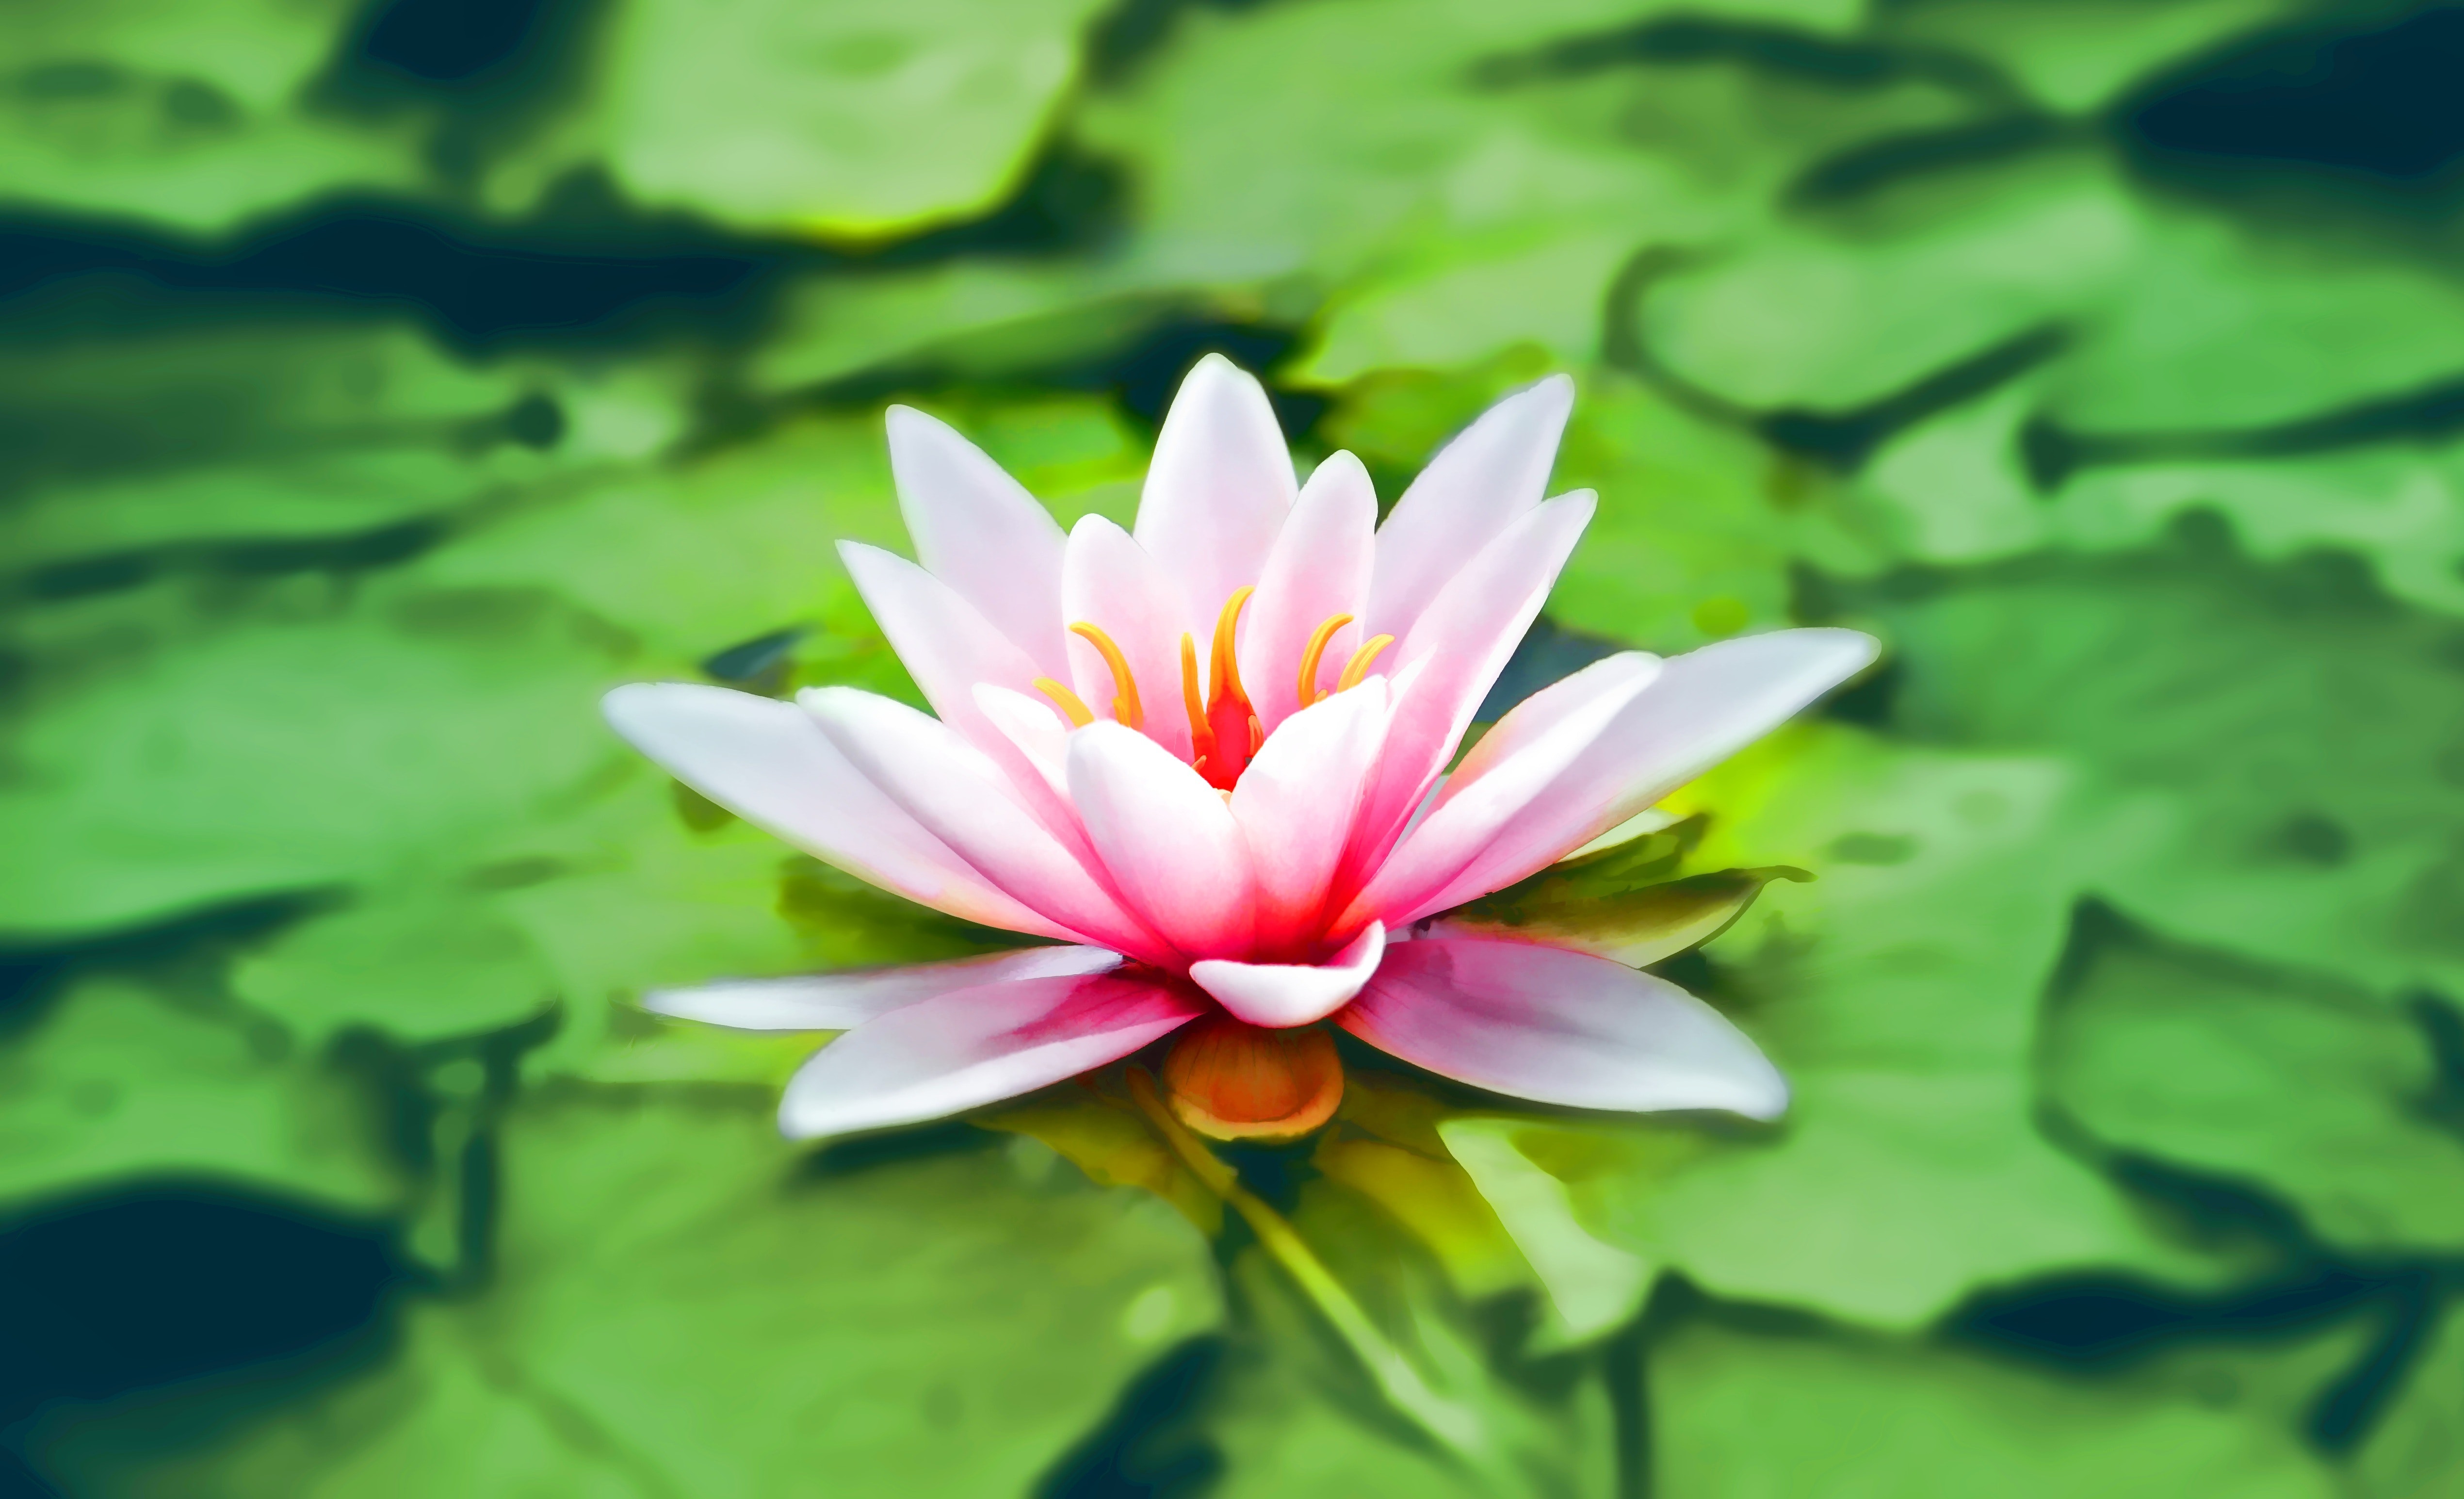 pink lotus flower on a green leaf